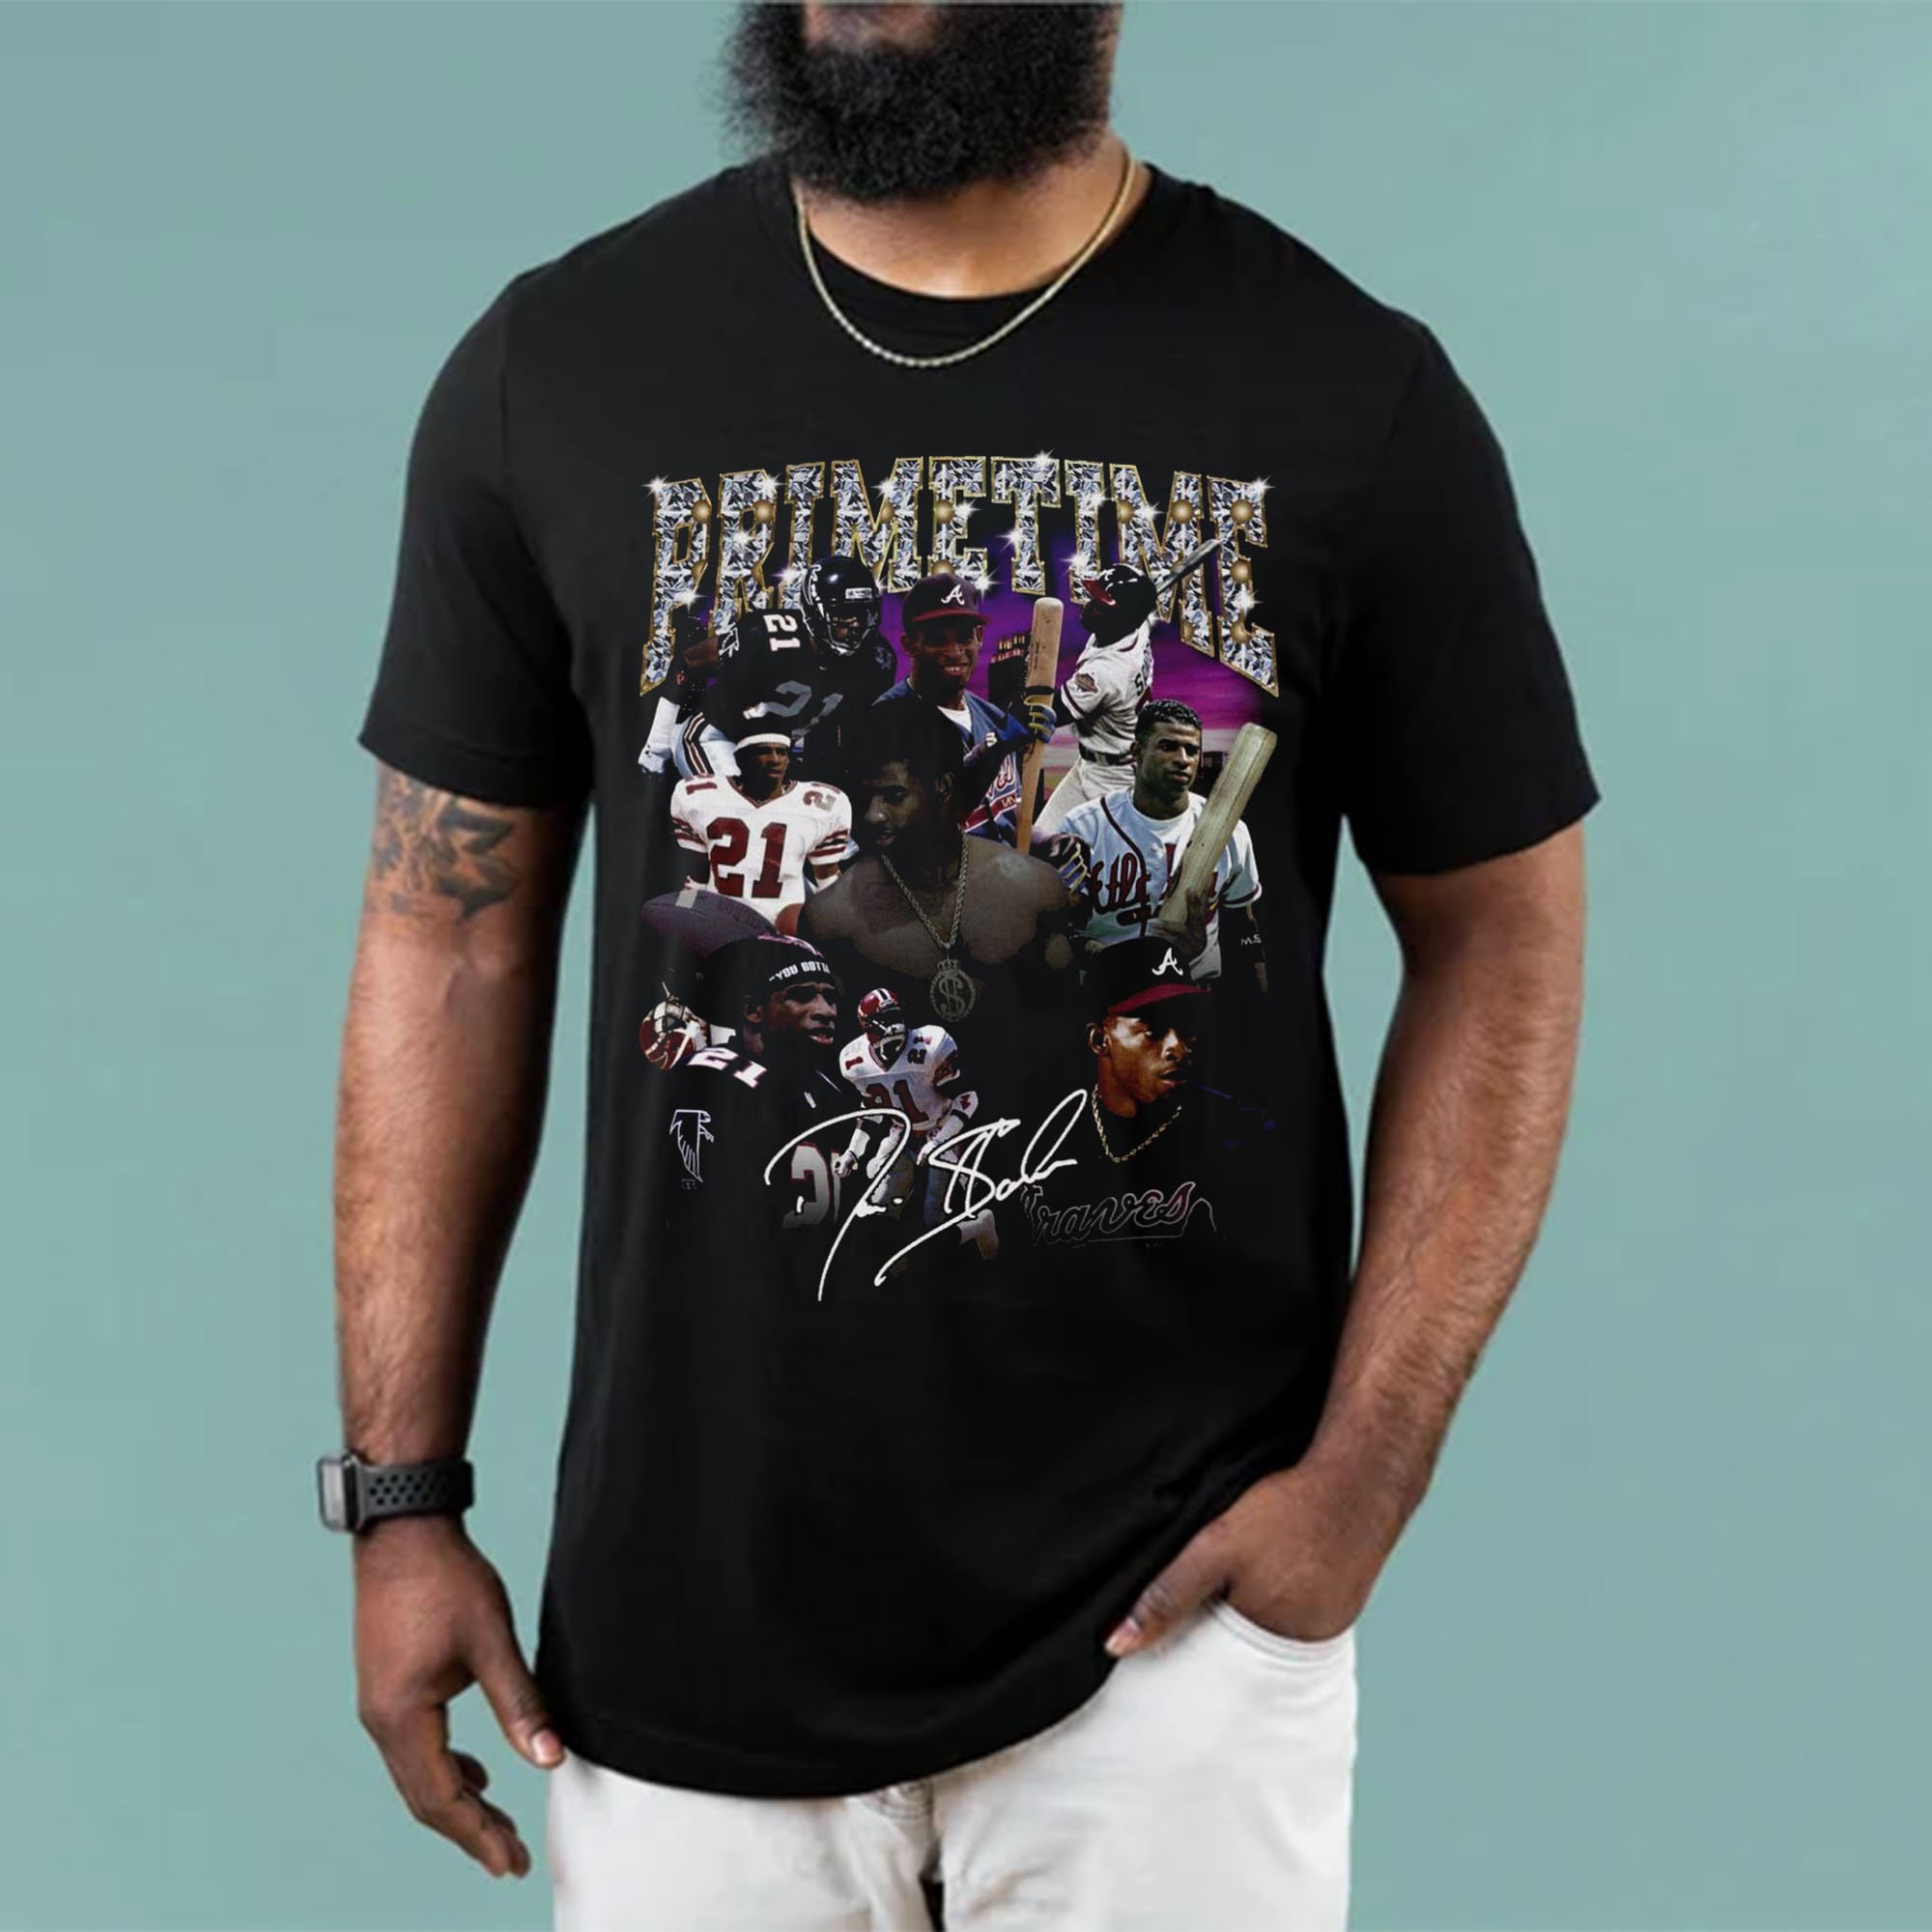 Deion Sanders Shirt, Deion Sanders Vintage Style Graphic Tee, Legend 49ers Football Shirt